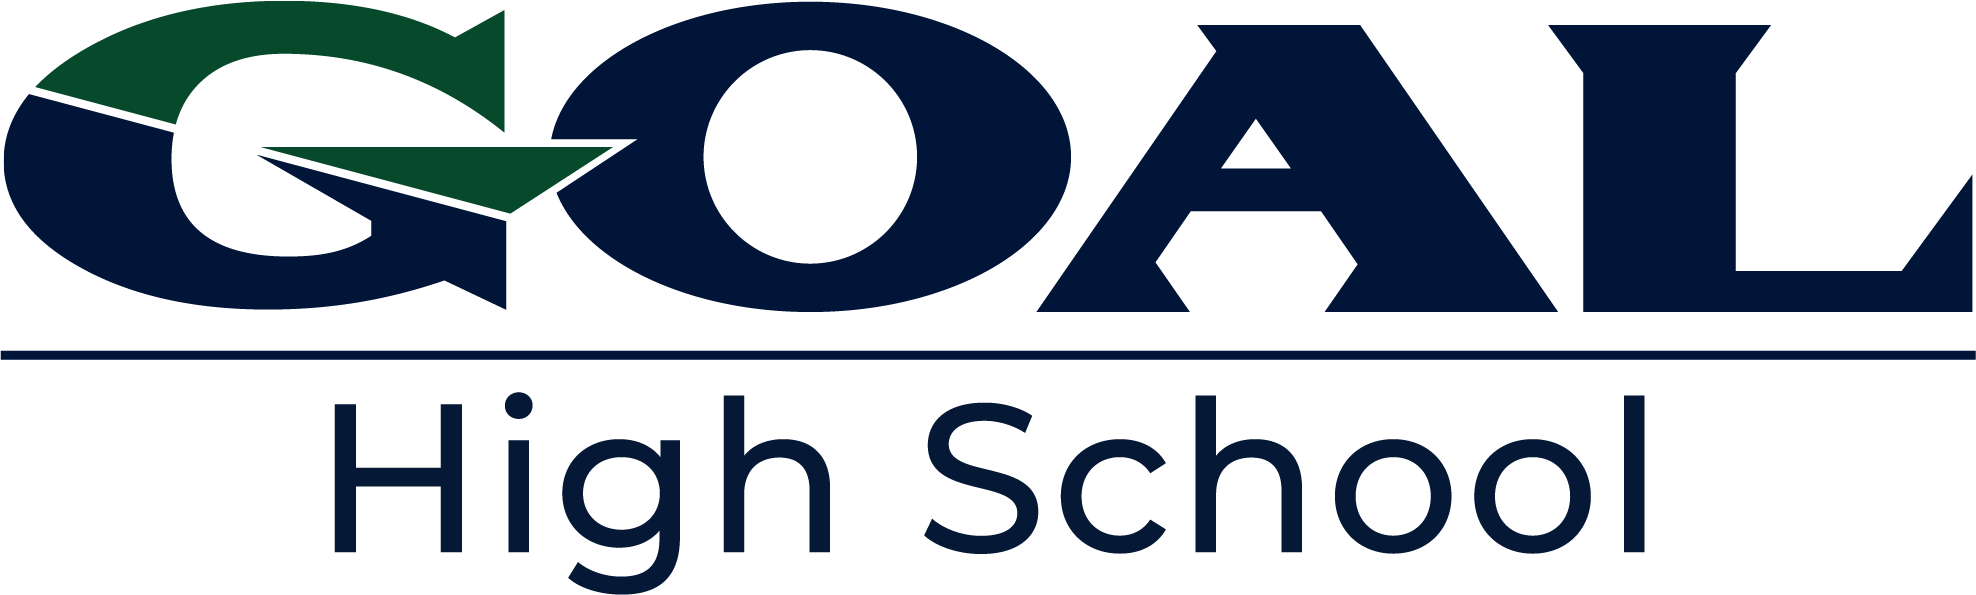 GOAL Academy High School logo